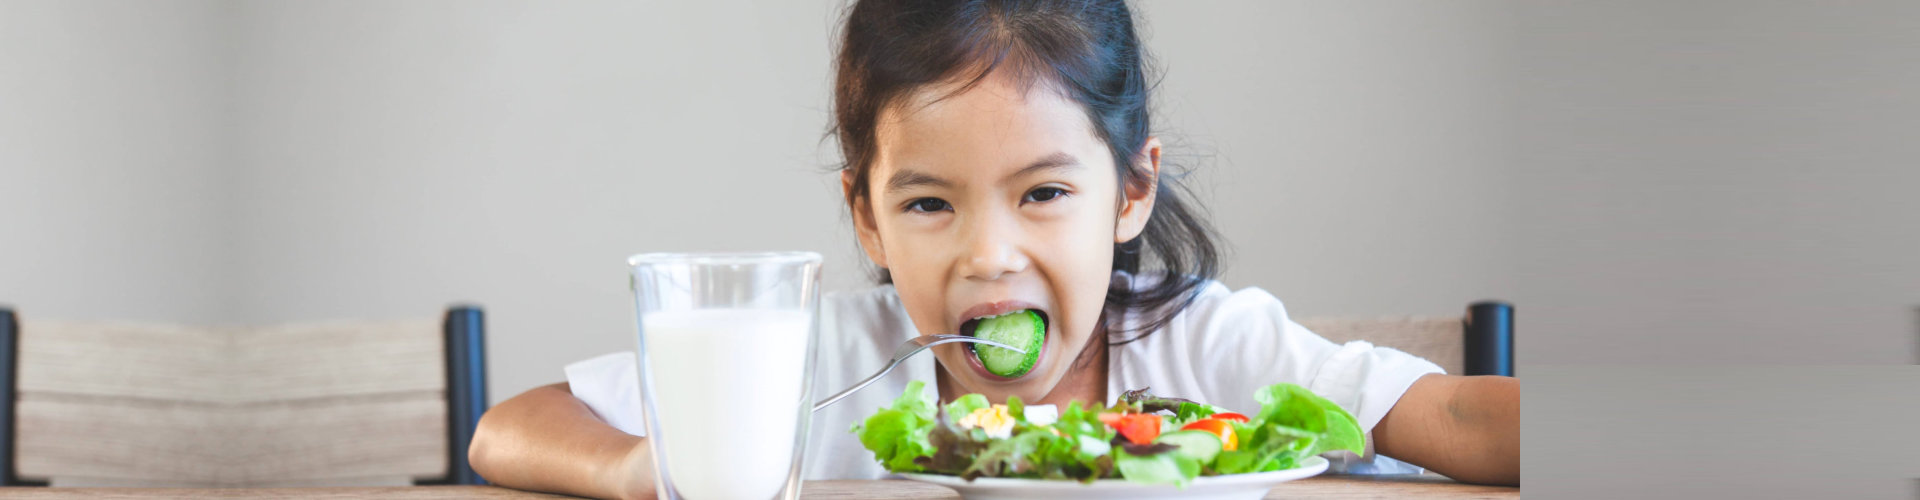 little girl eating healthy foods